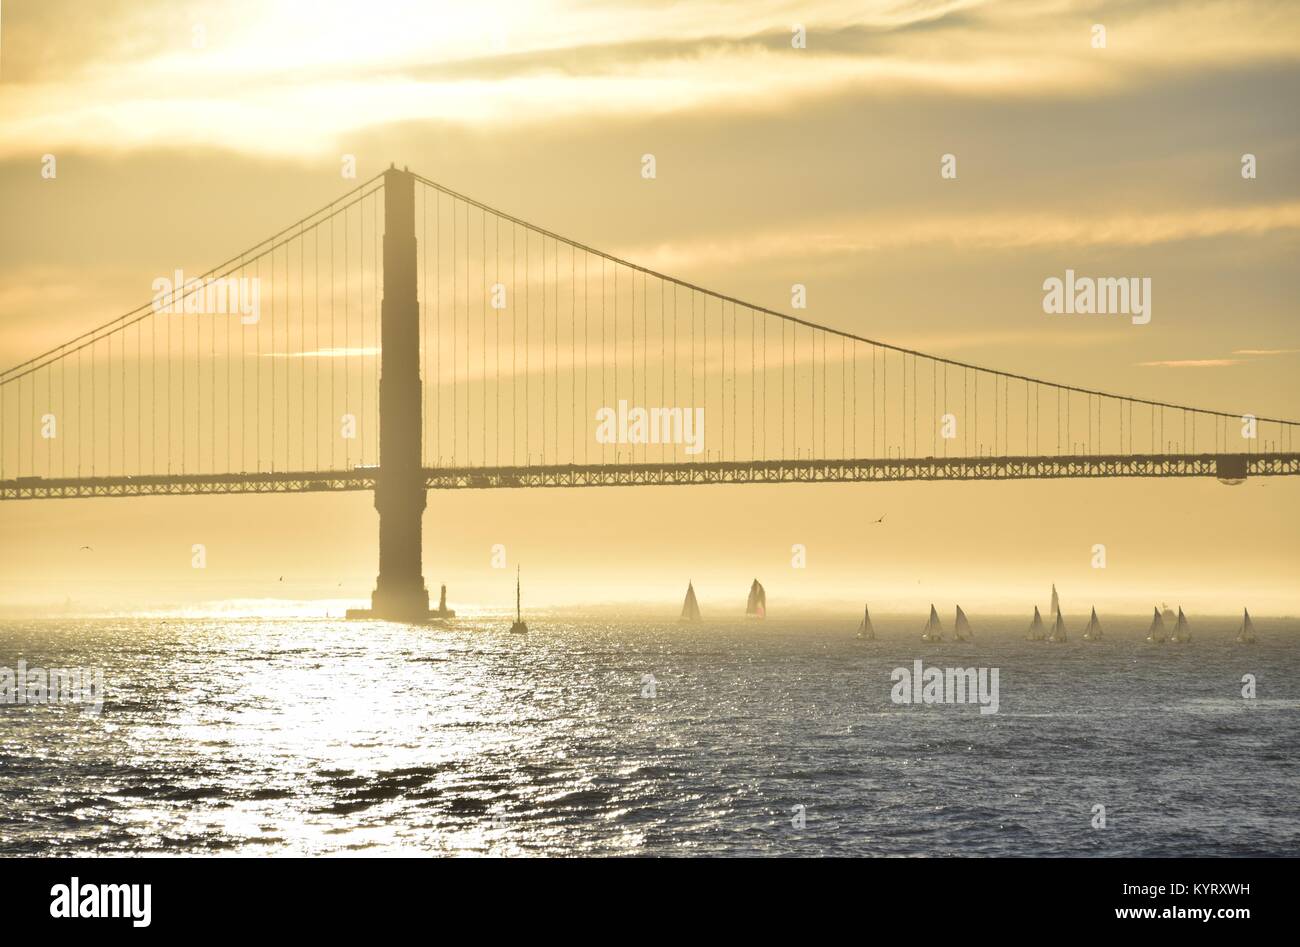 A flotilla of small sailing boats at sunset under the Golden Gate Bridge, San Francisco. Stock Photo